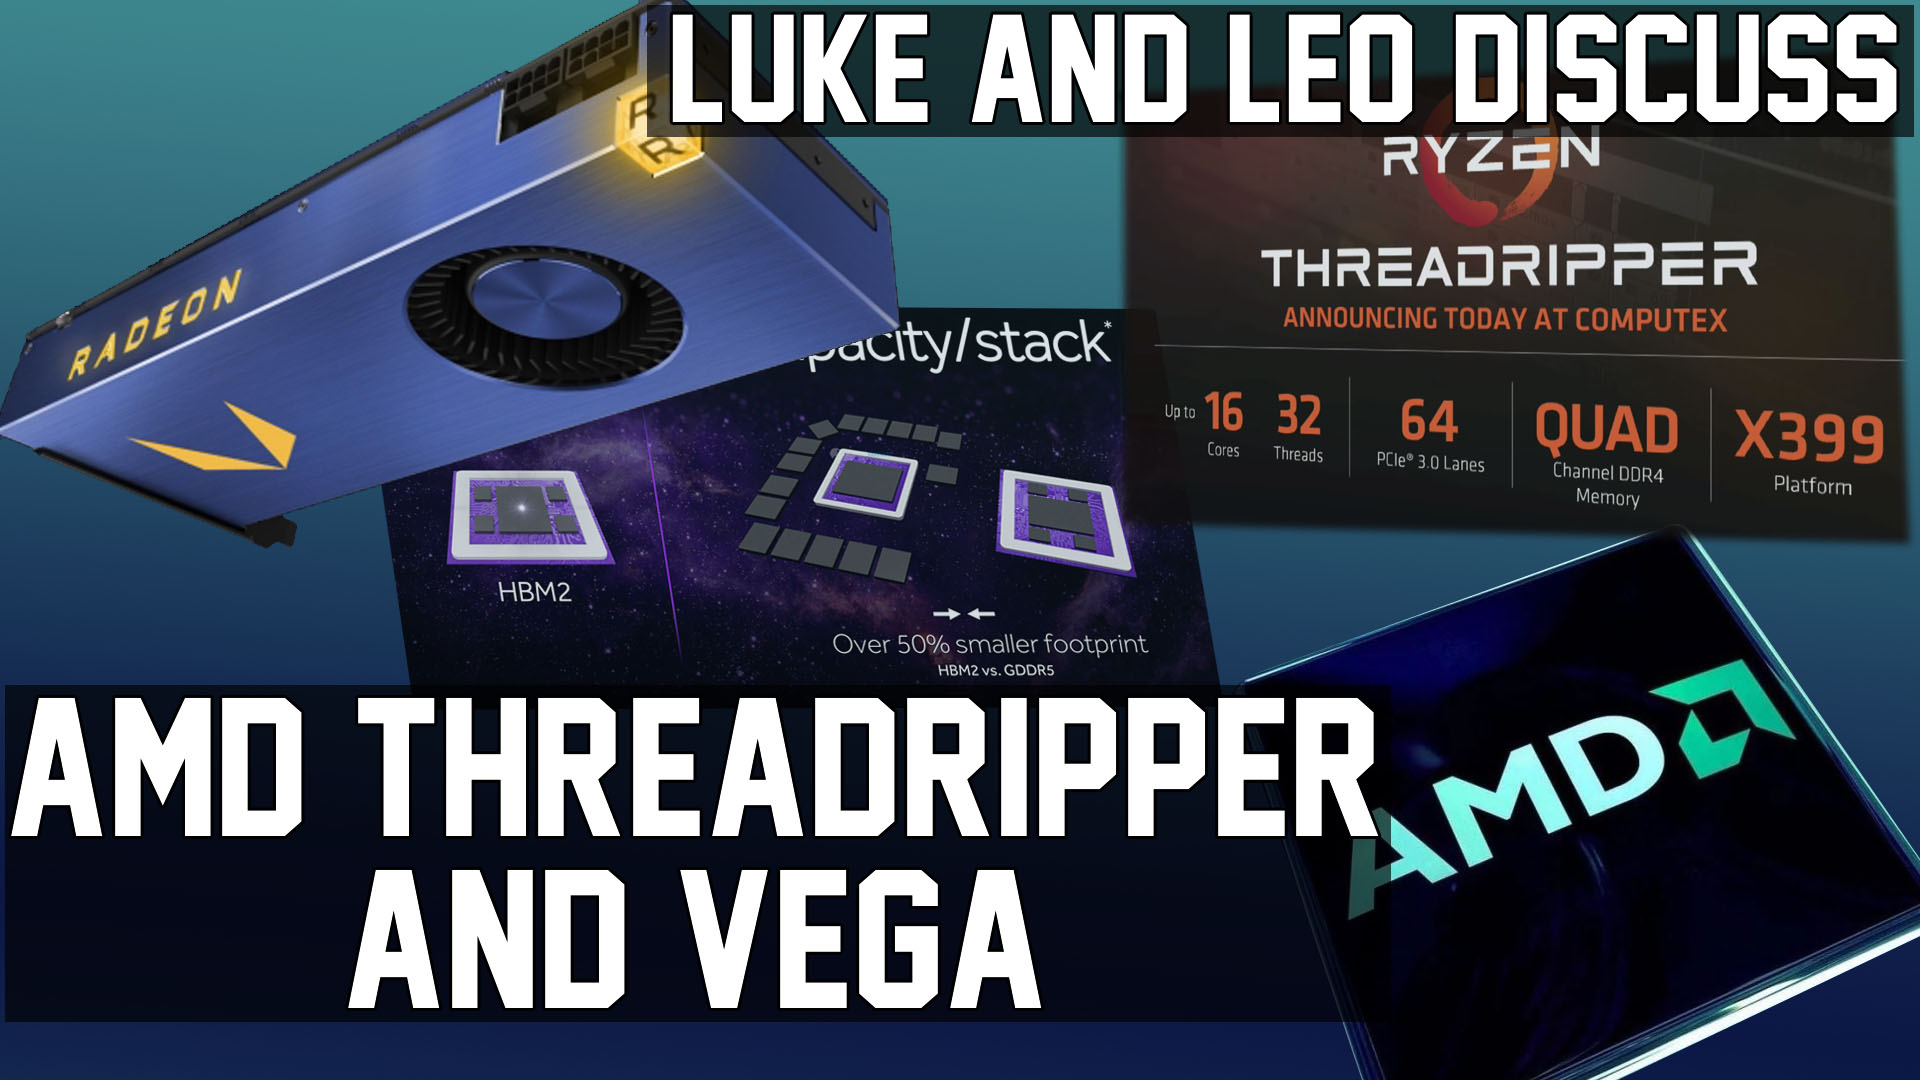 AMD Threadripper and Vega: Luke and Leo discuss